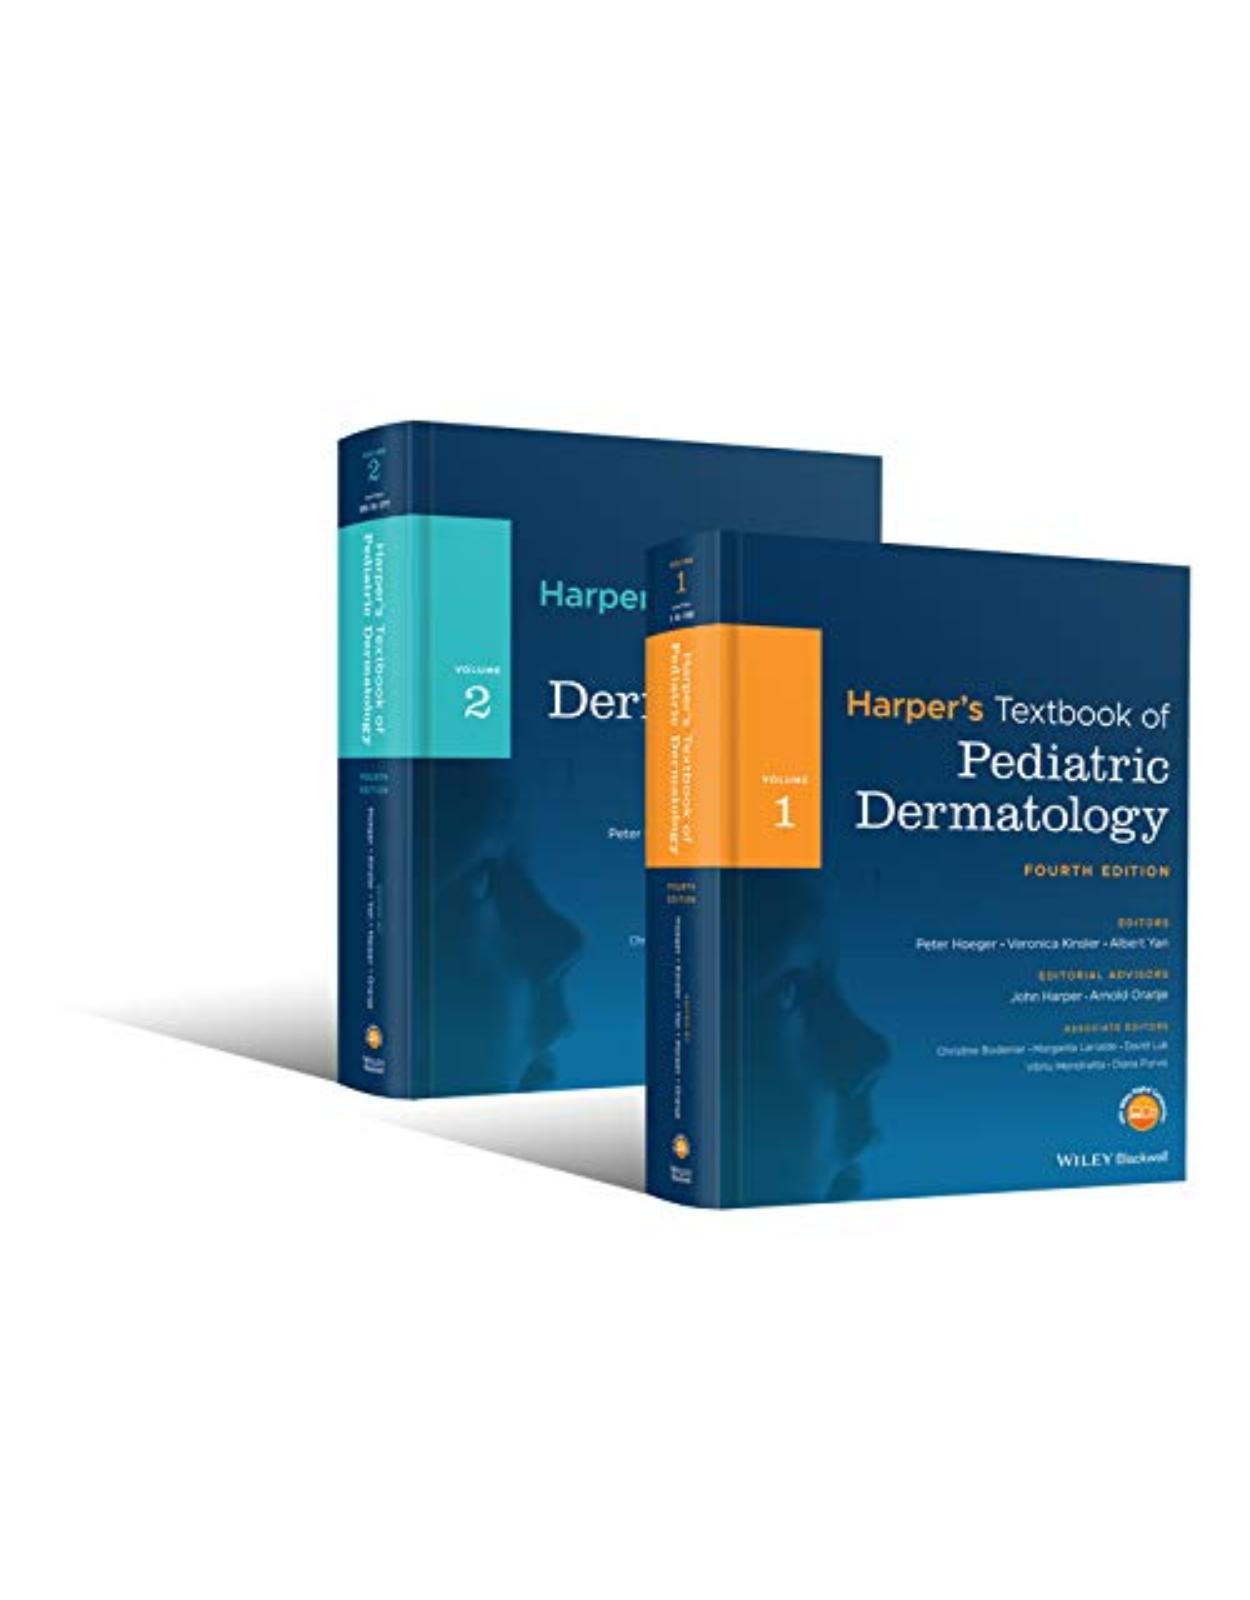 Harper s Textbook of Pediatric Dermatology: 2 Volume Set, 4th edition